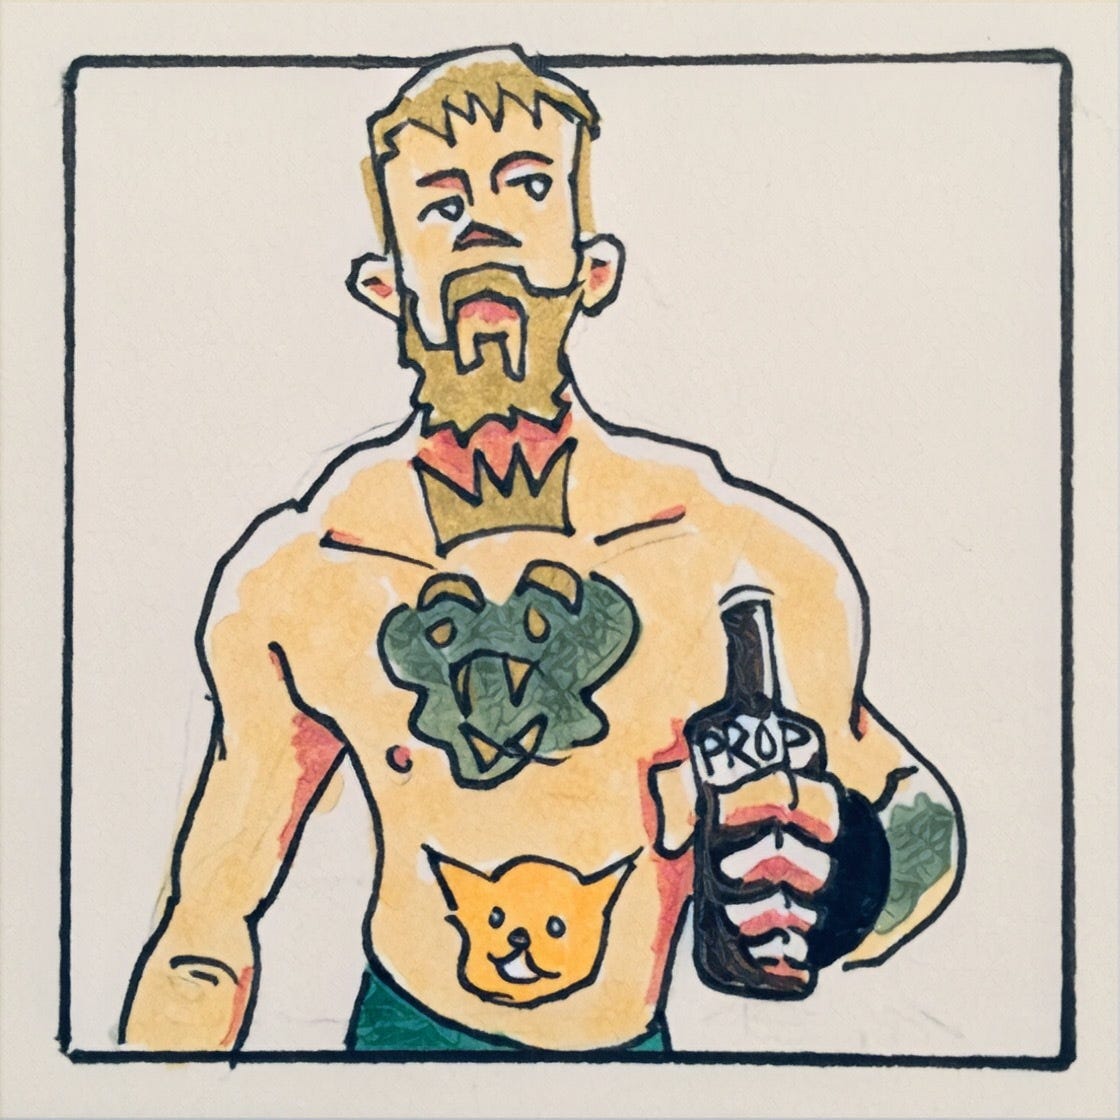 An illustration of UFC star Conor McGregor holding a bottle of Proper 12 Whiskey.